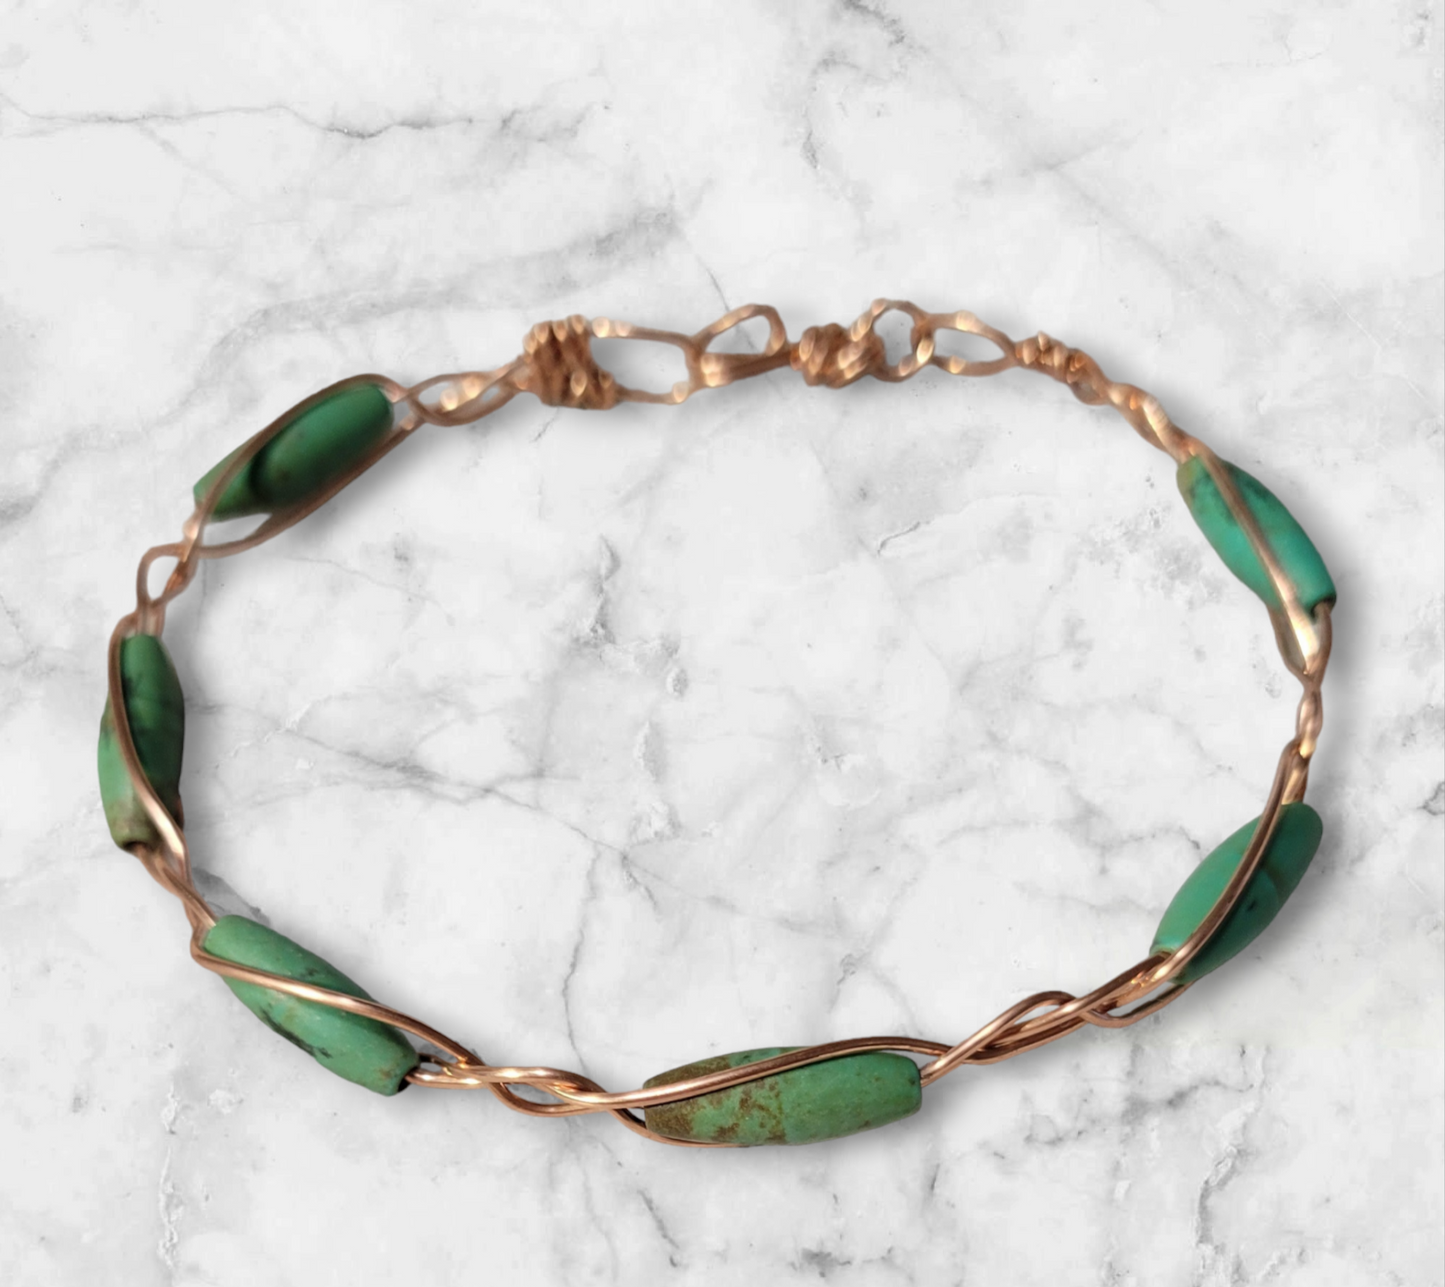 Turquoise Bracelet and Necklace set